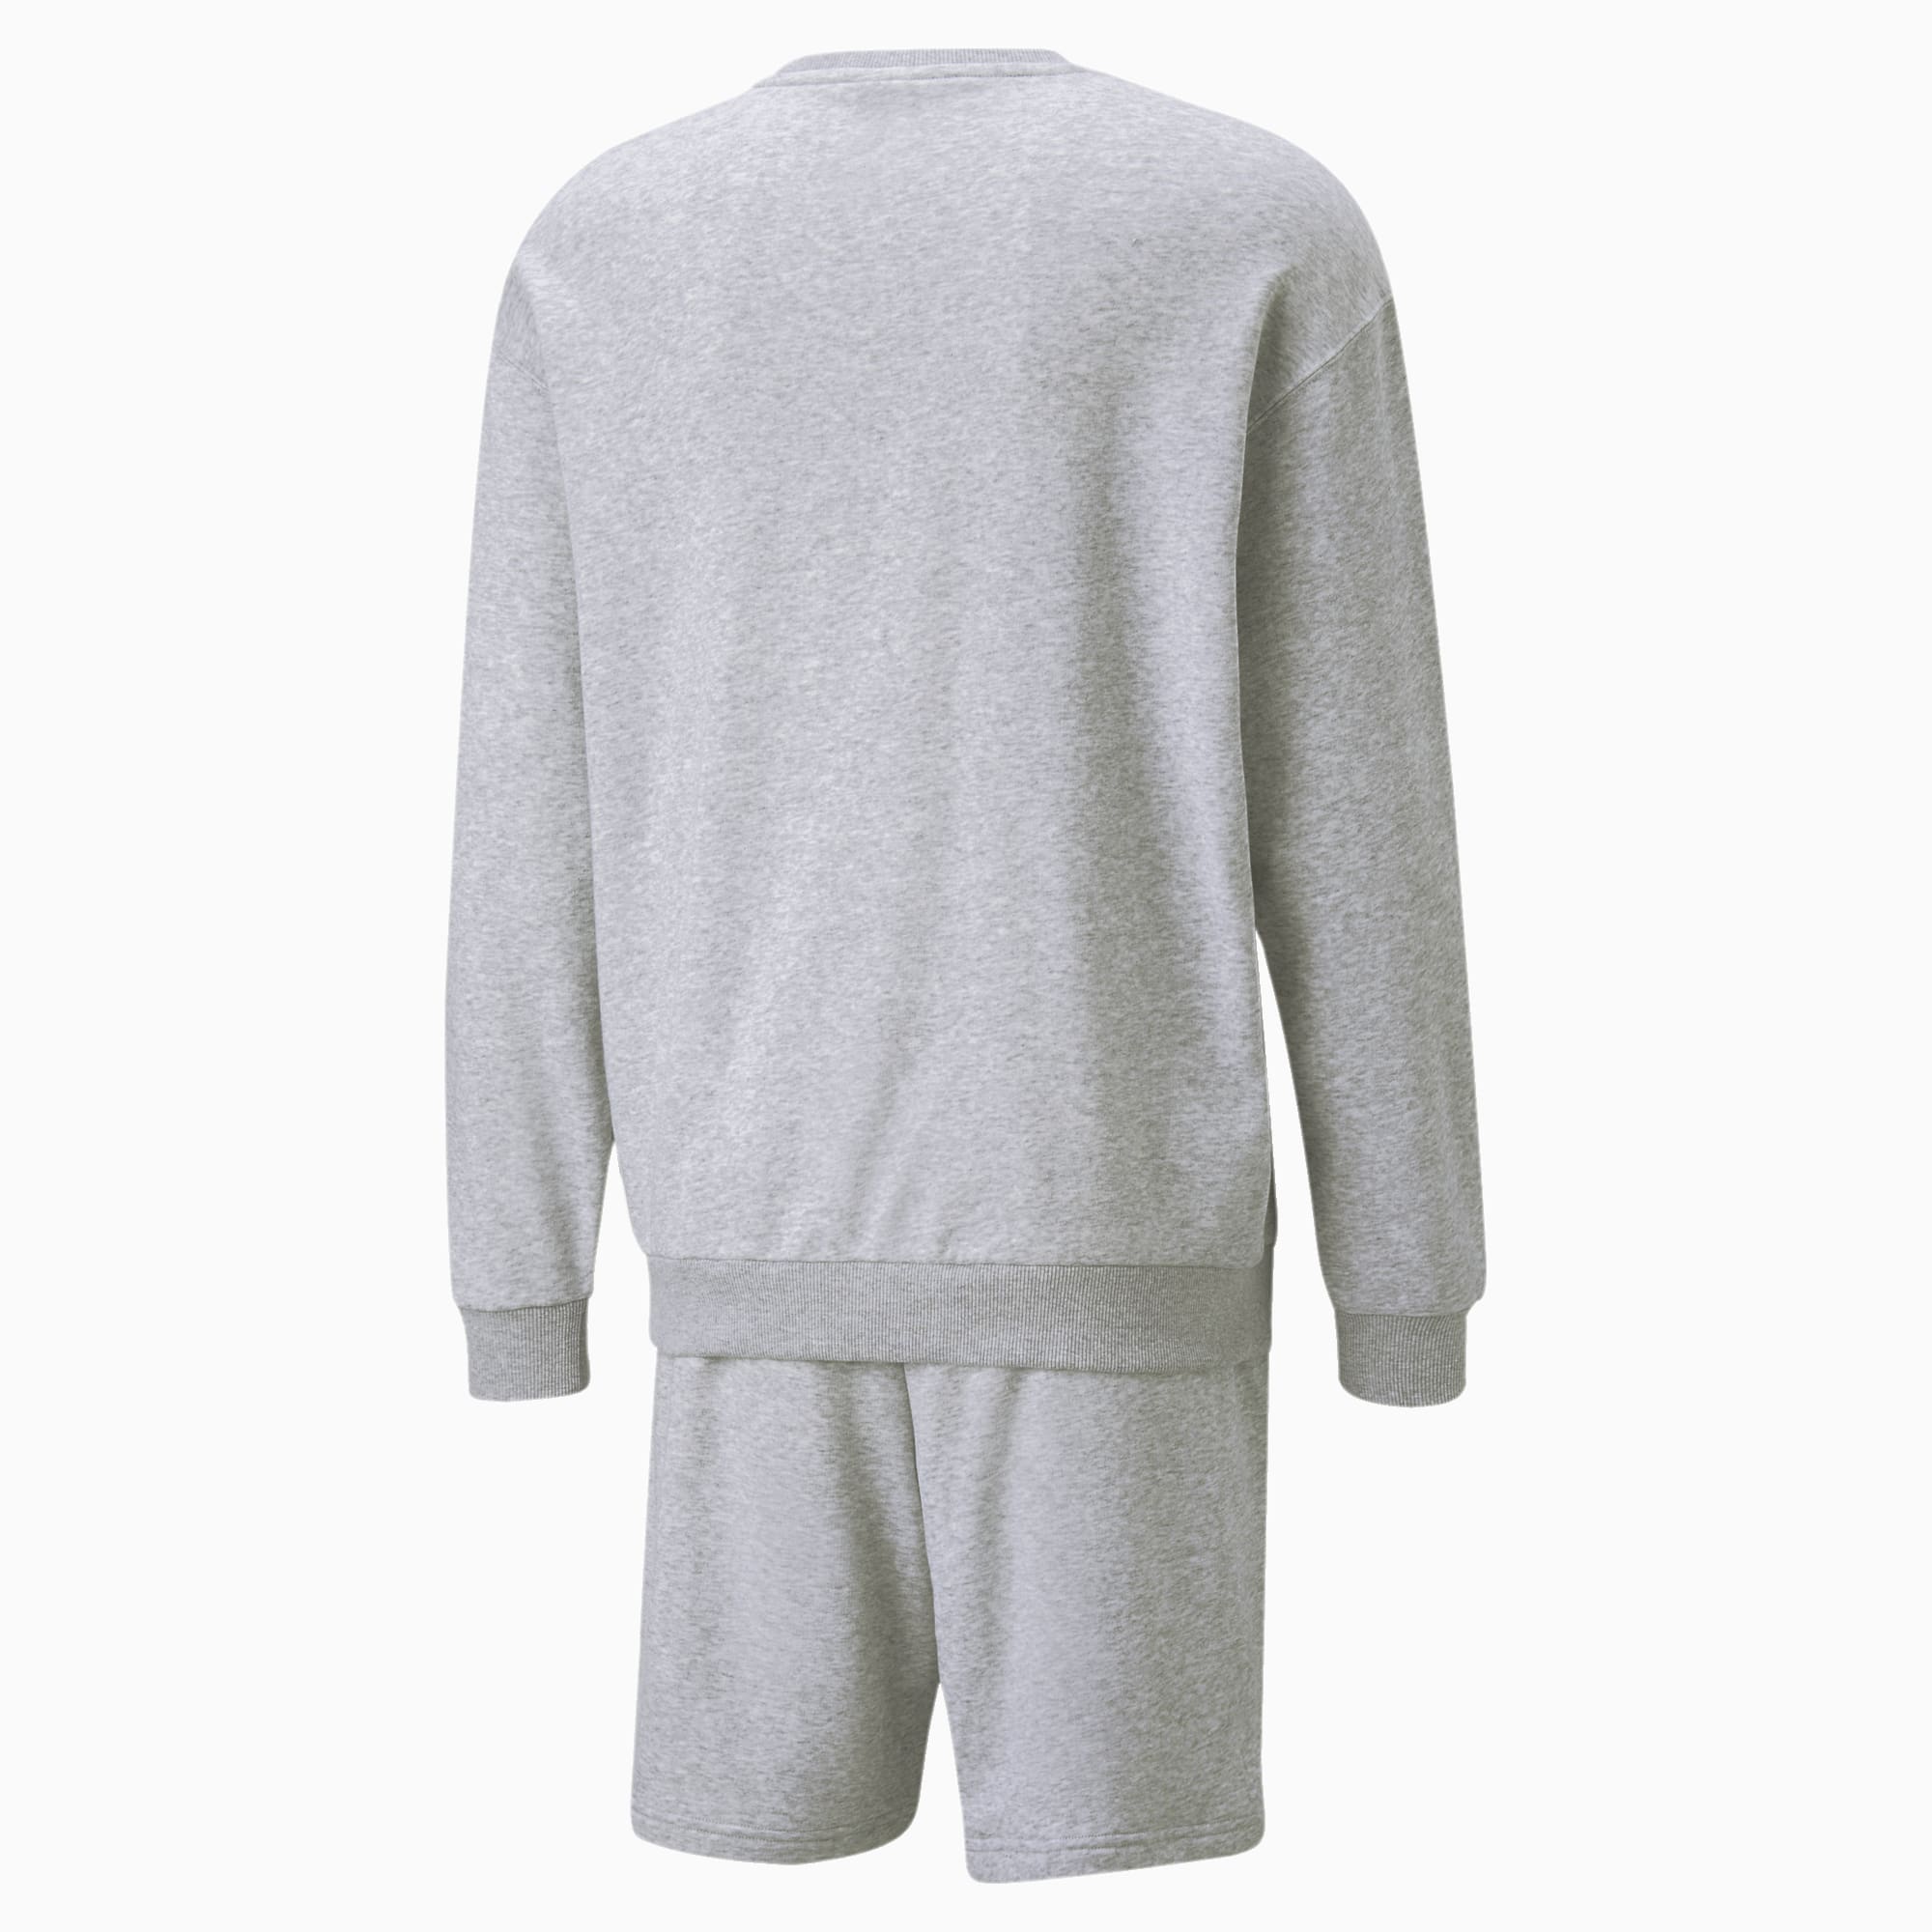 PUMA Relaxed Sweatsuit Men, Light Grey Heather, Size XL